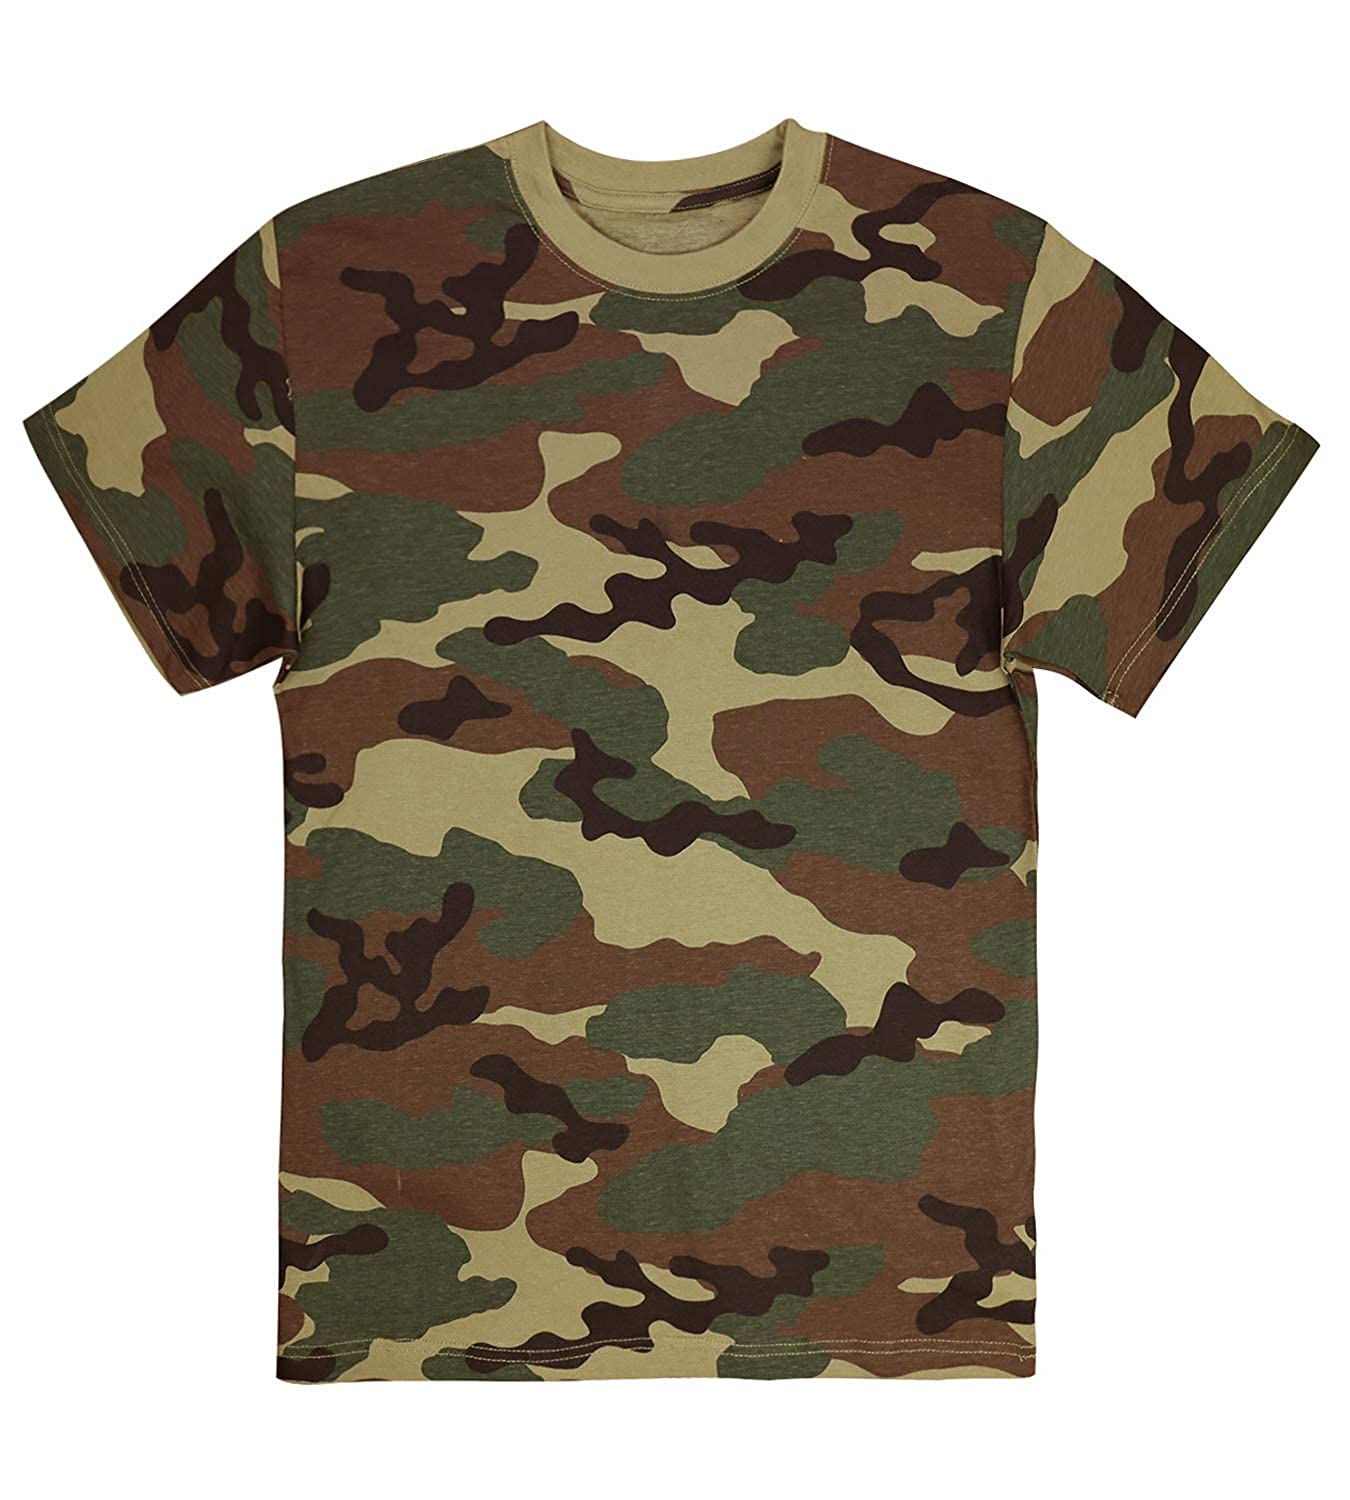 Slim Fit G.I. Military Classic Short Sleeve T-Shirts - Woodland Camo